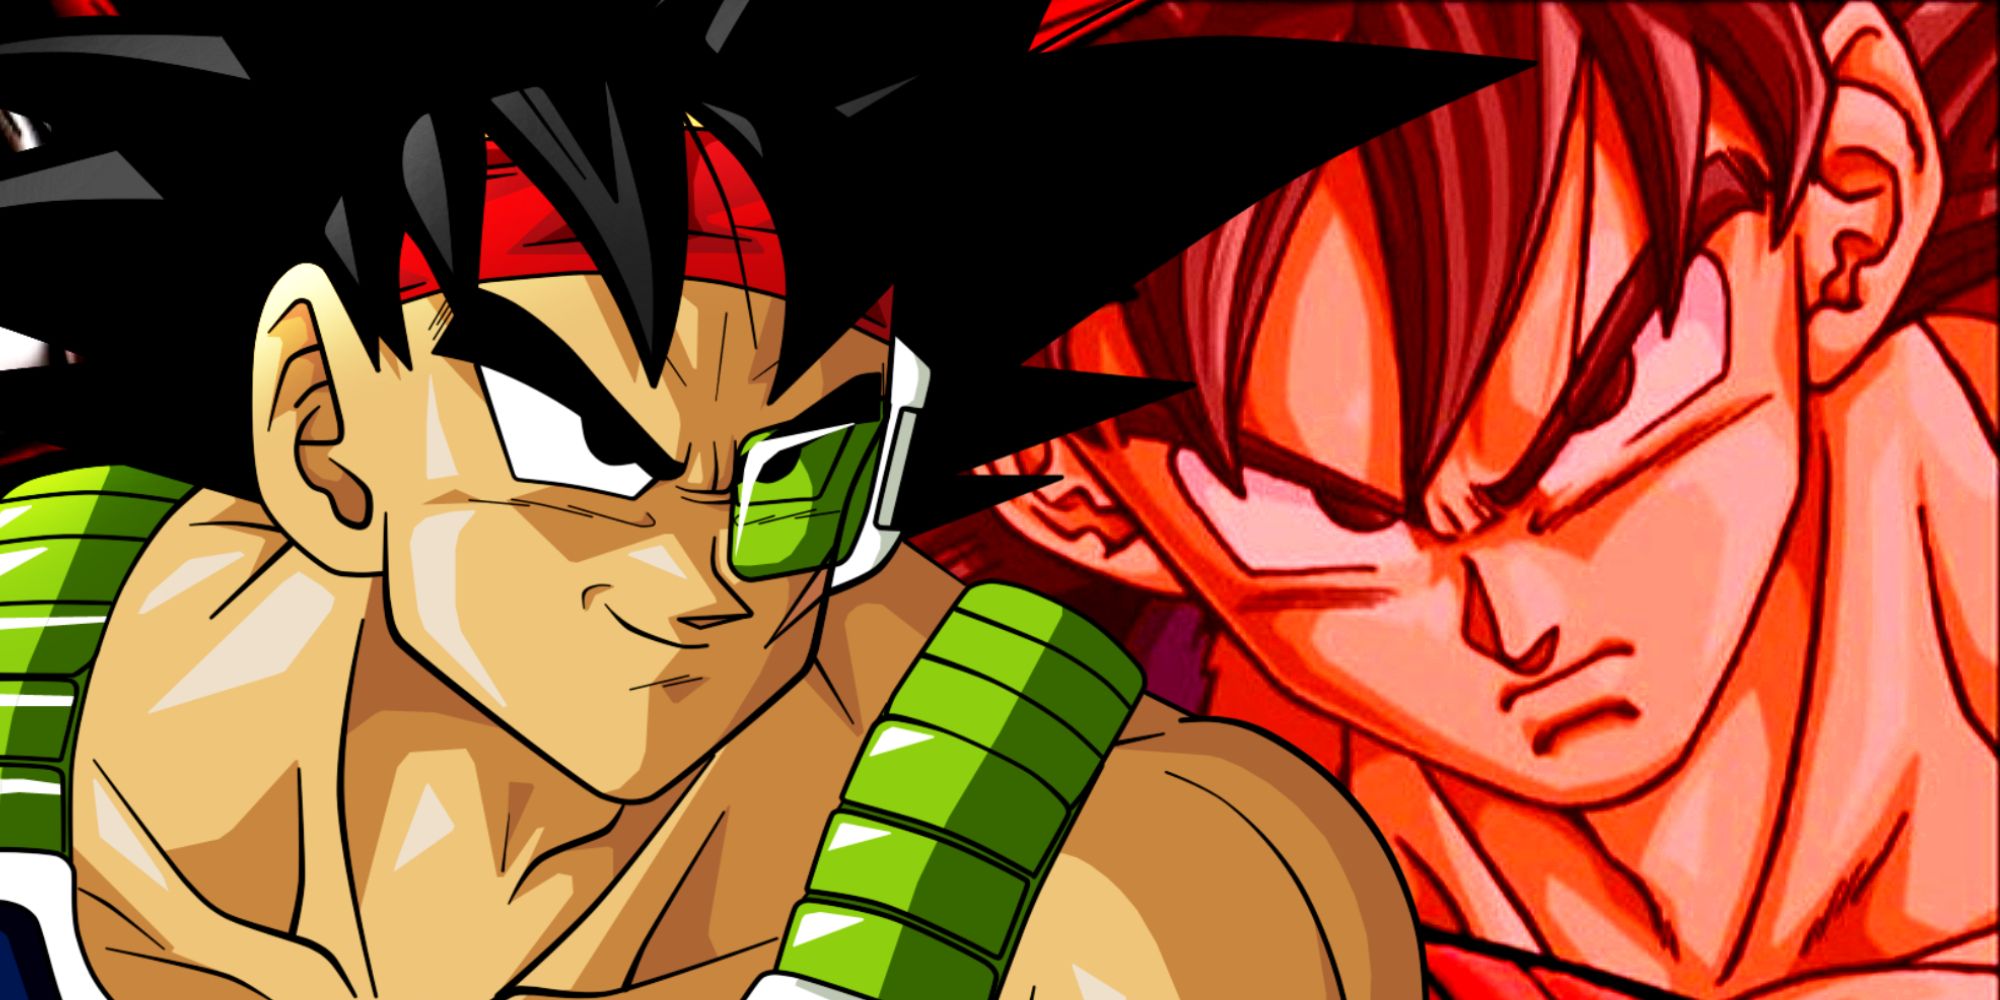 Bardock and Goku in Dragon Ball Z